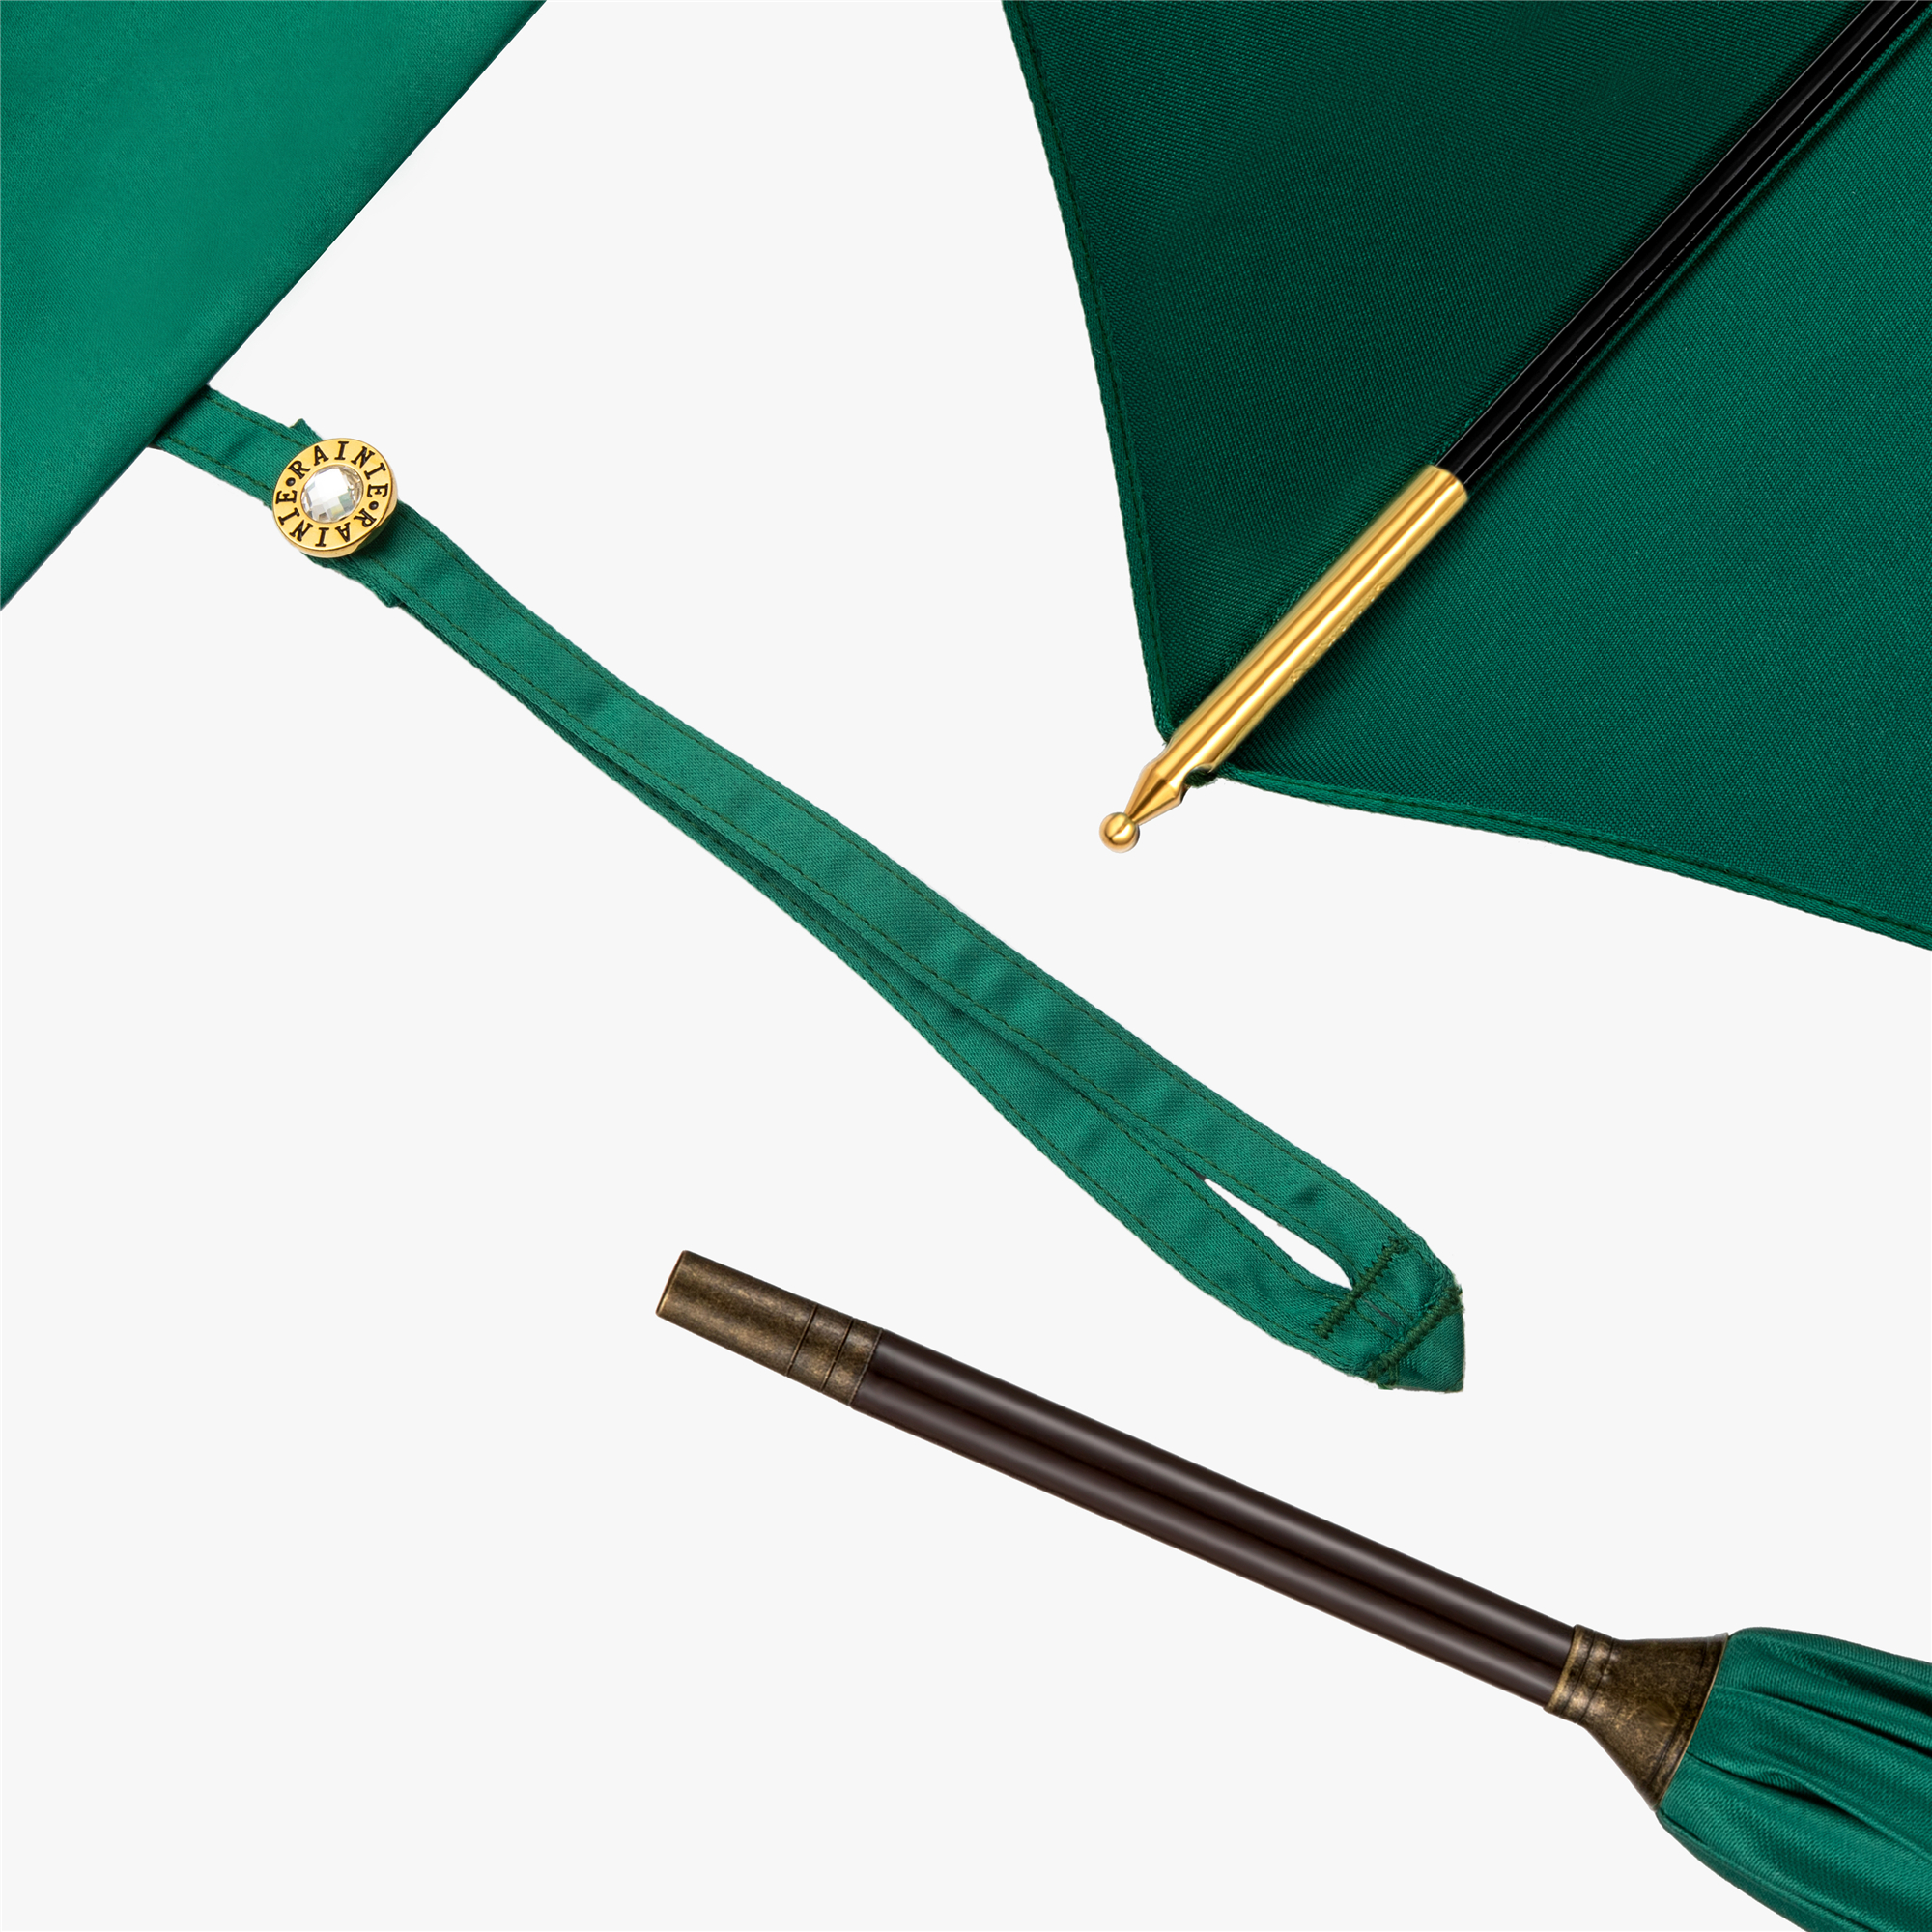 Long umbrella with metal wooden handle